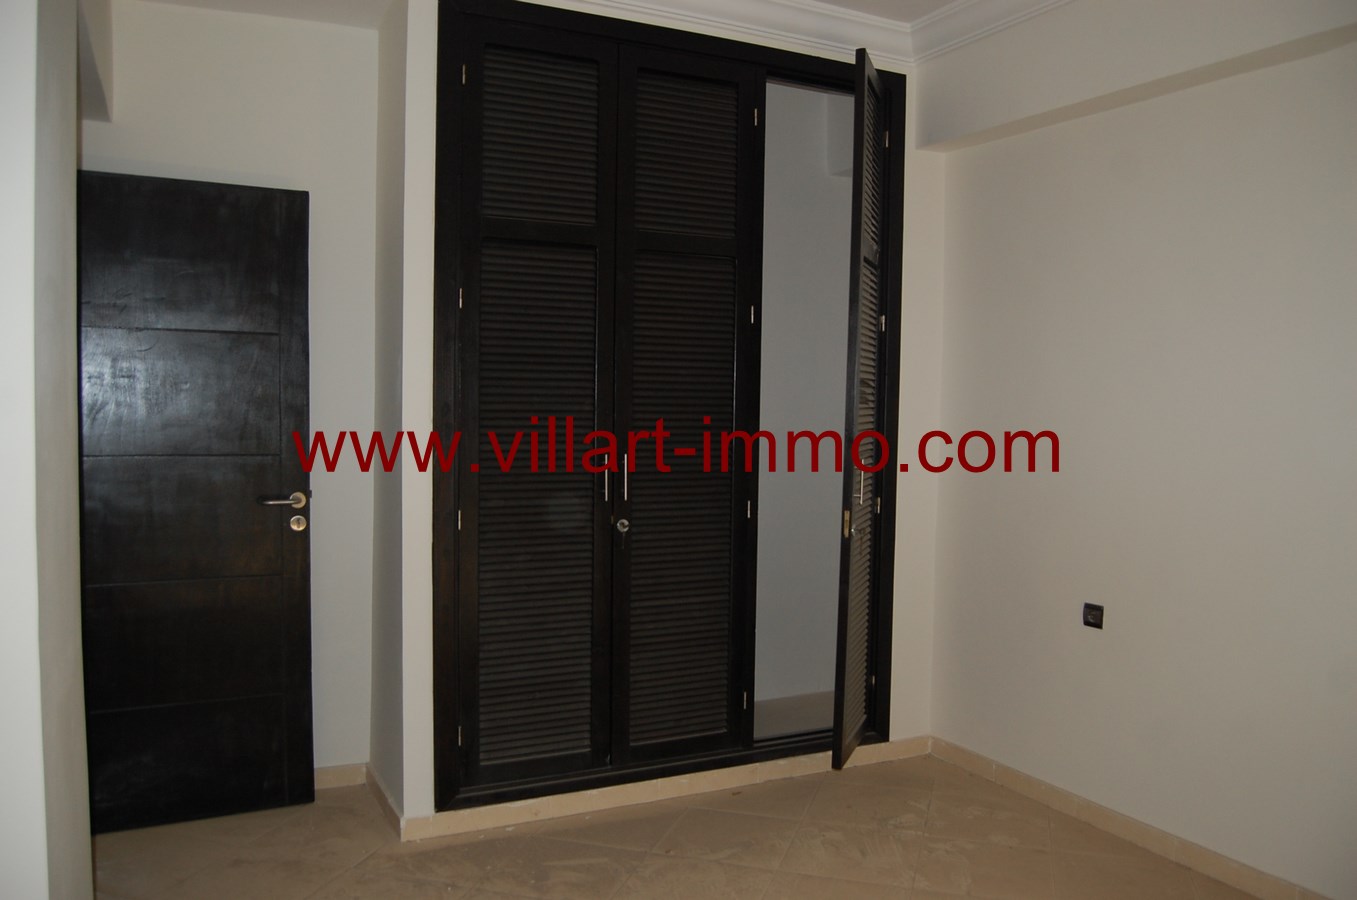 6-vente-appartement-tanger-chambre-3-va464-villart-immo